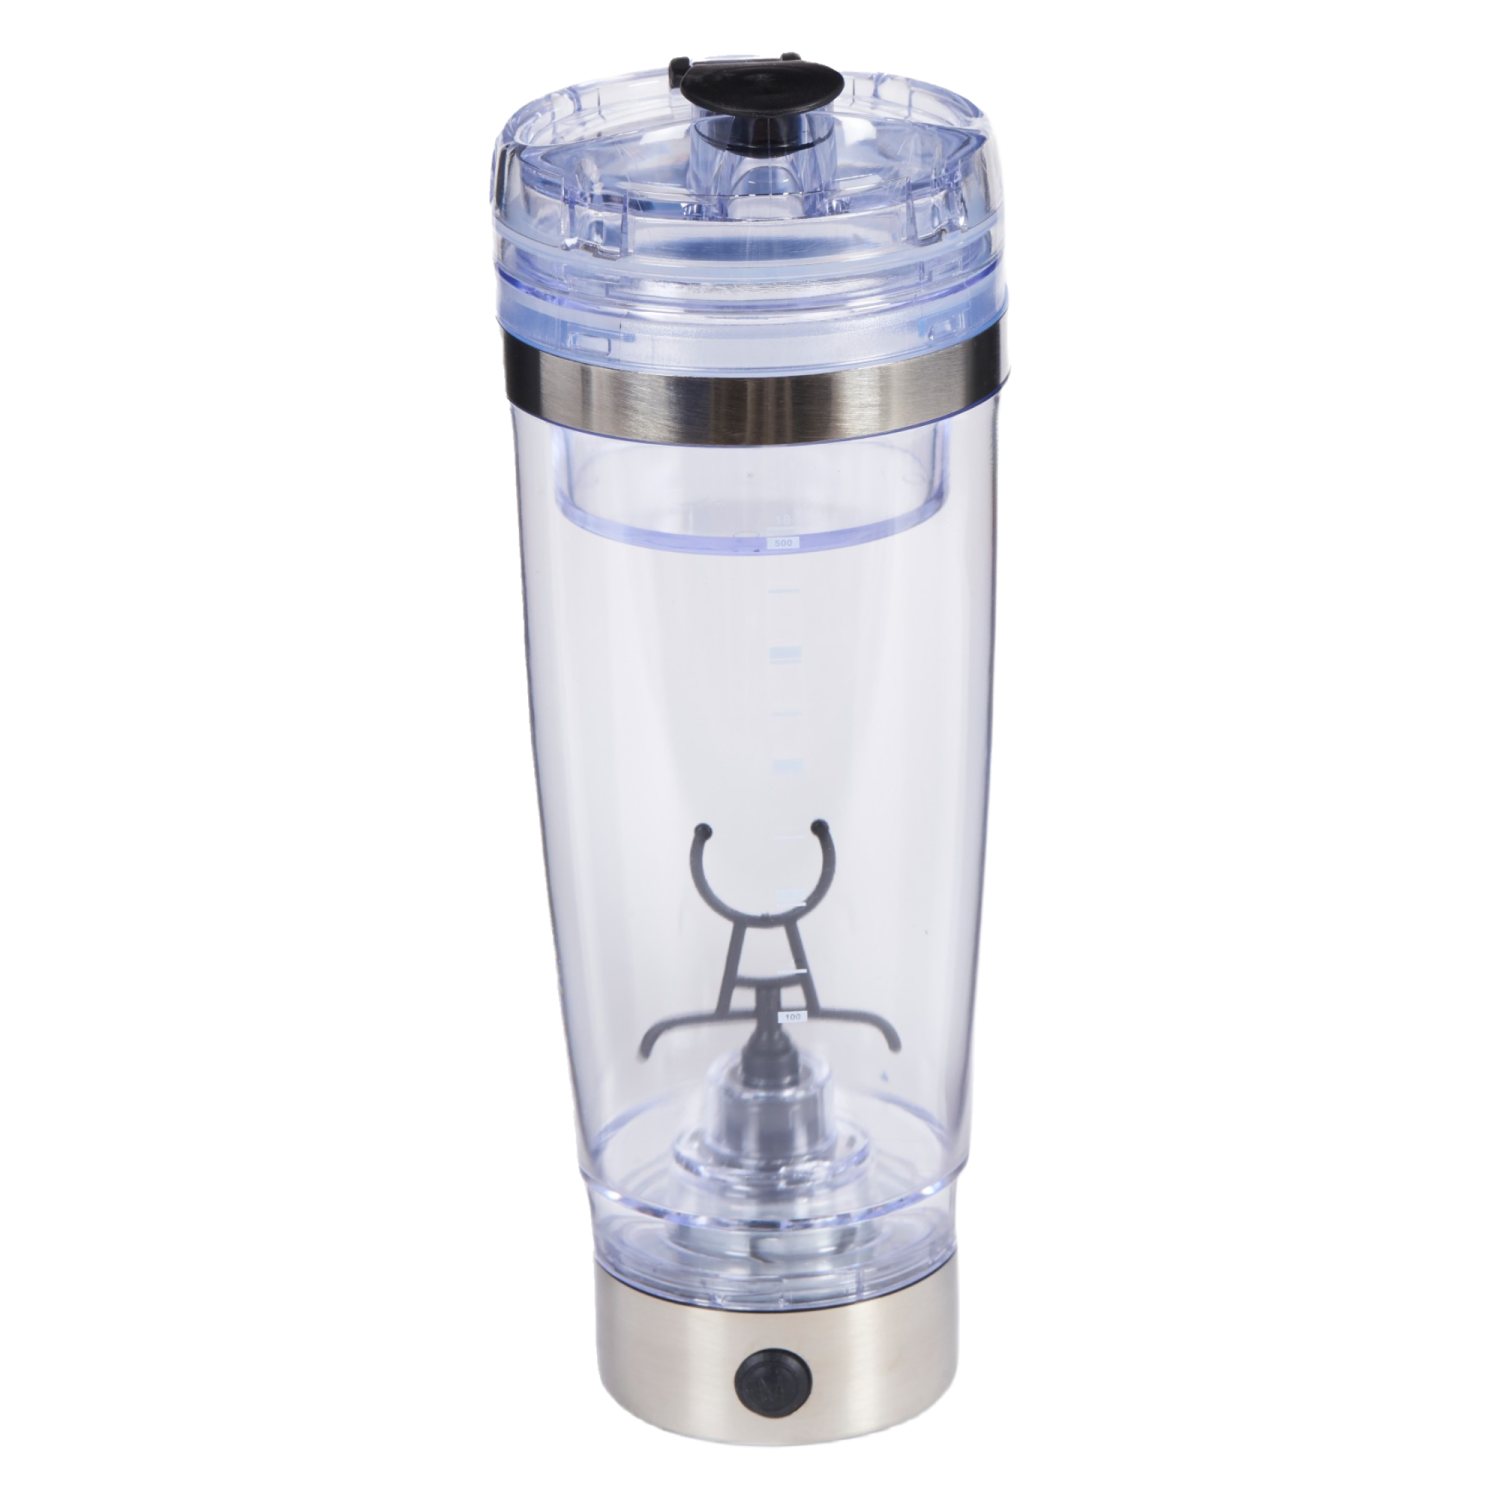 Tuphregyow Shaker Bottle,Electric Protein Shaker Bottle,650Ml